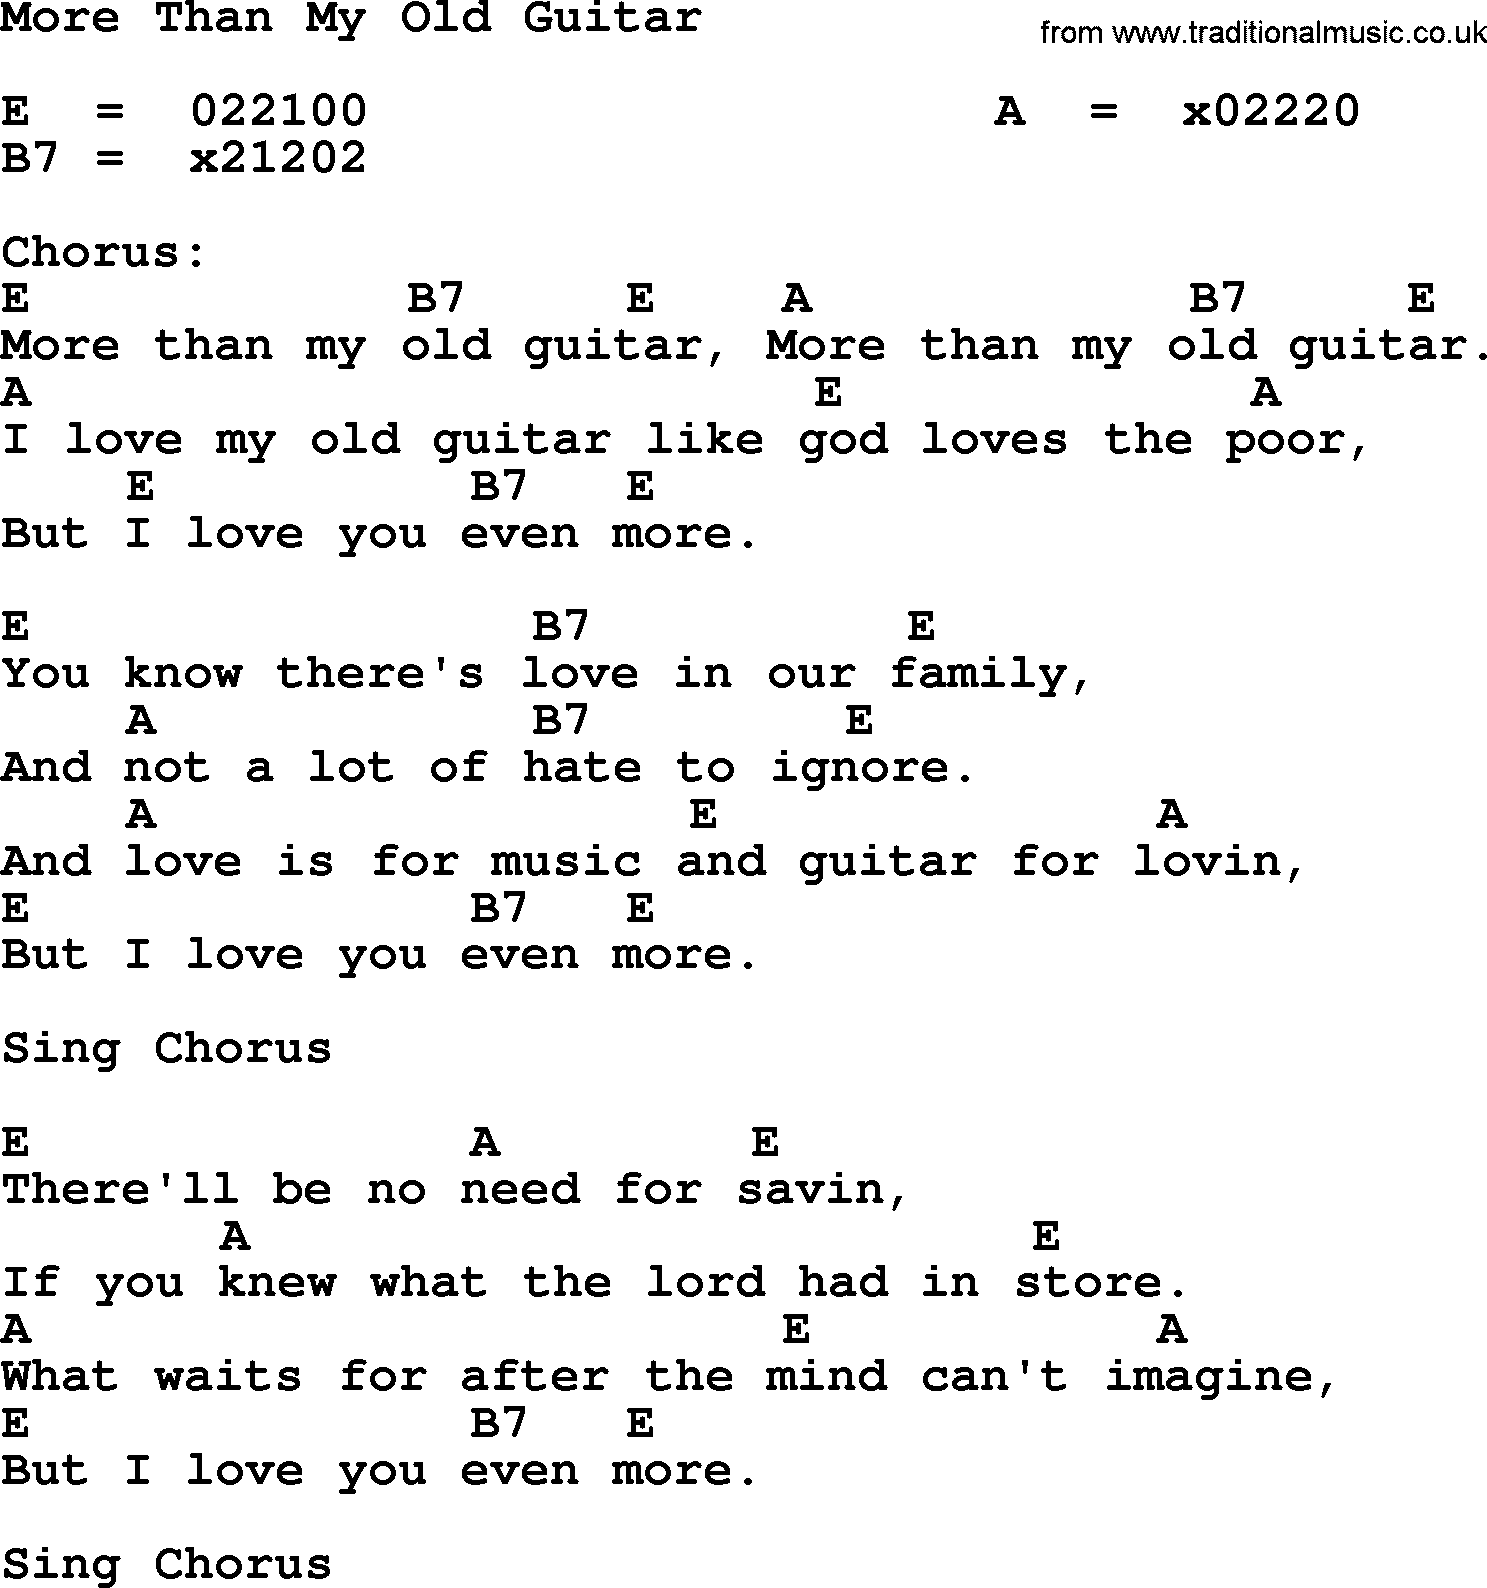 Merle Haggard song: More Than My Old Guitar, lyrics and chords